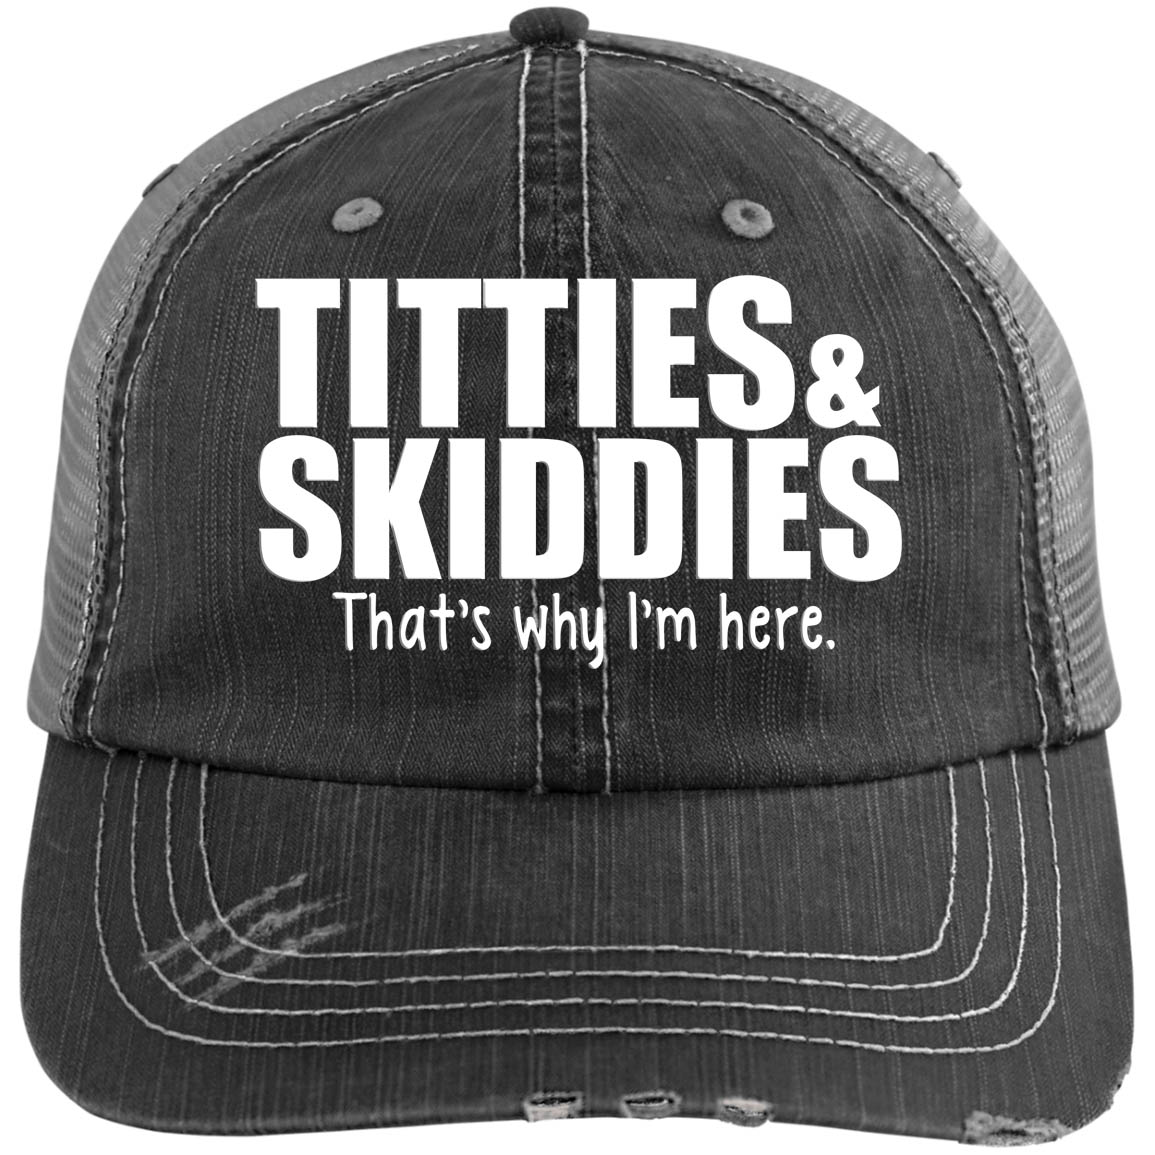 Hats - Titties & Skiddies - Distressed Unstructured Trucker Cap